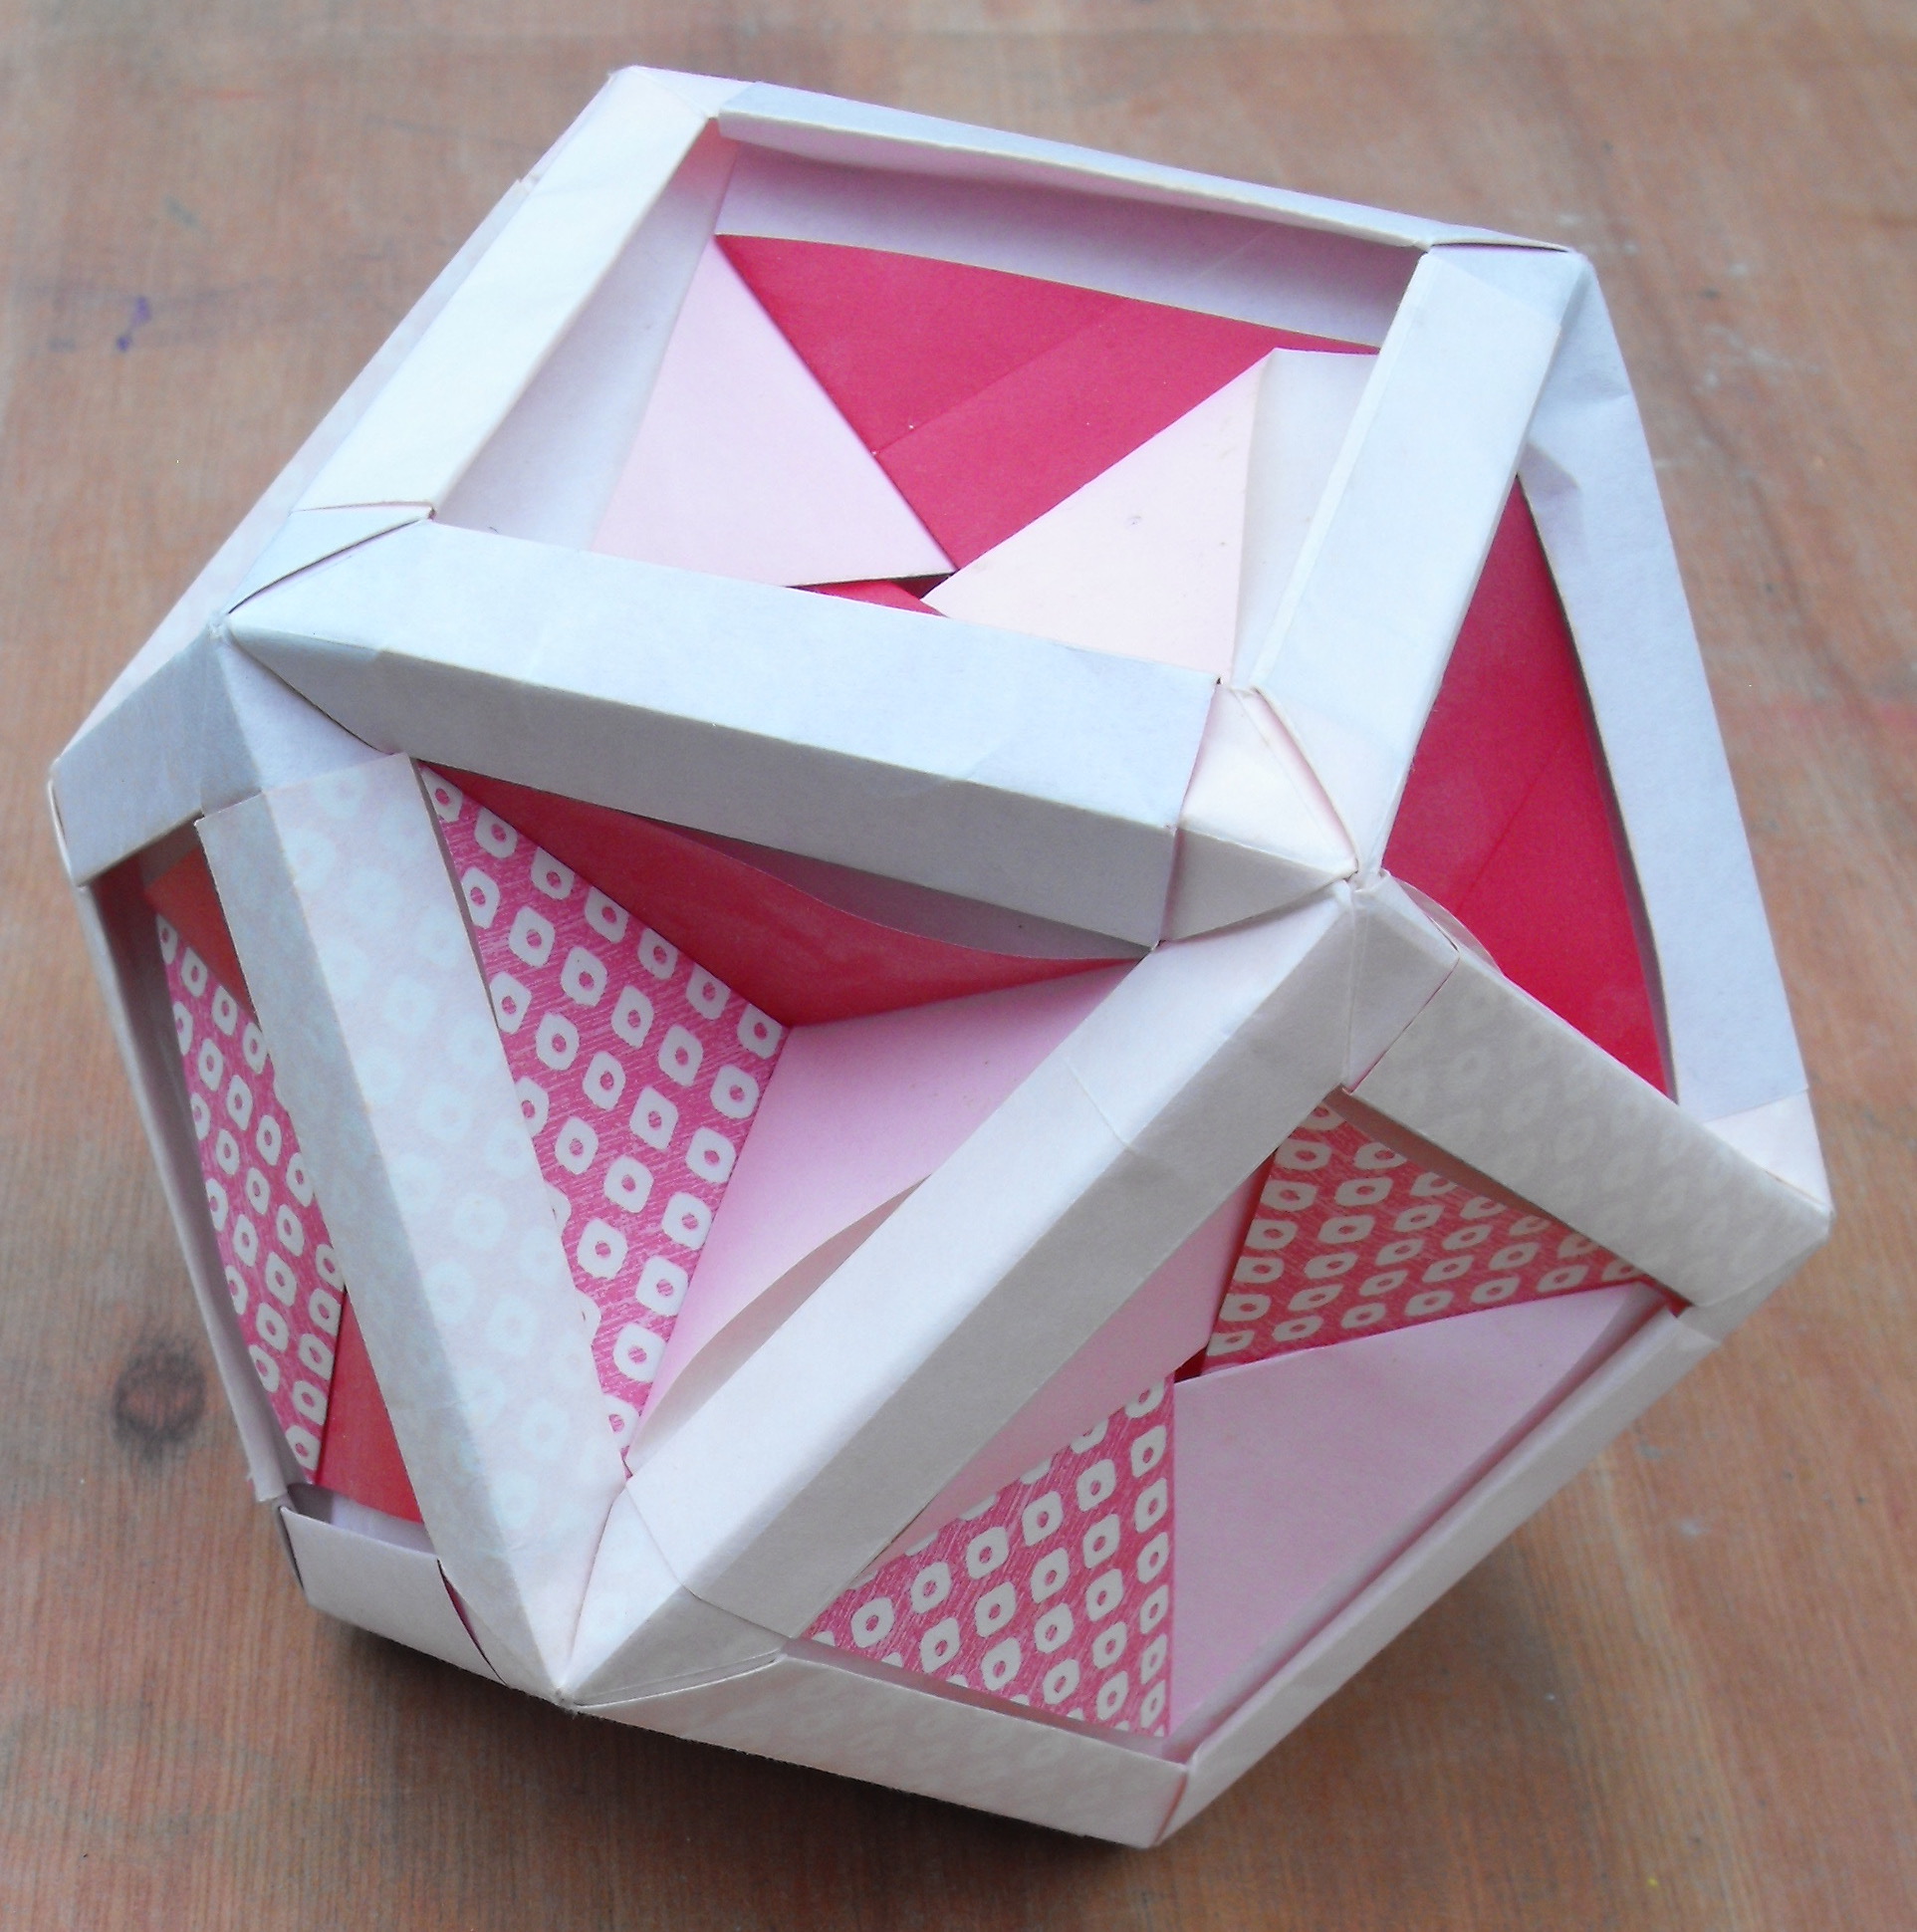 polyhedron unit